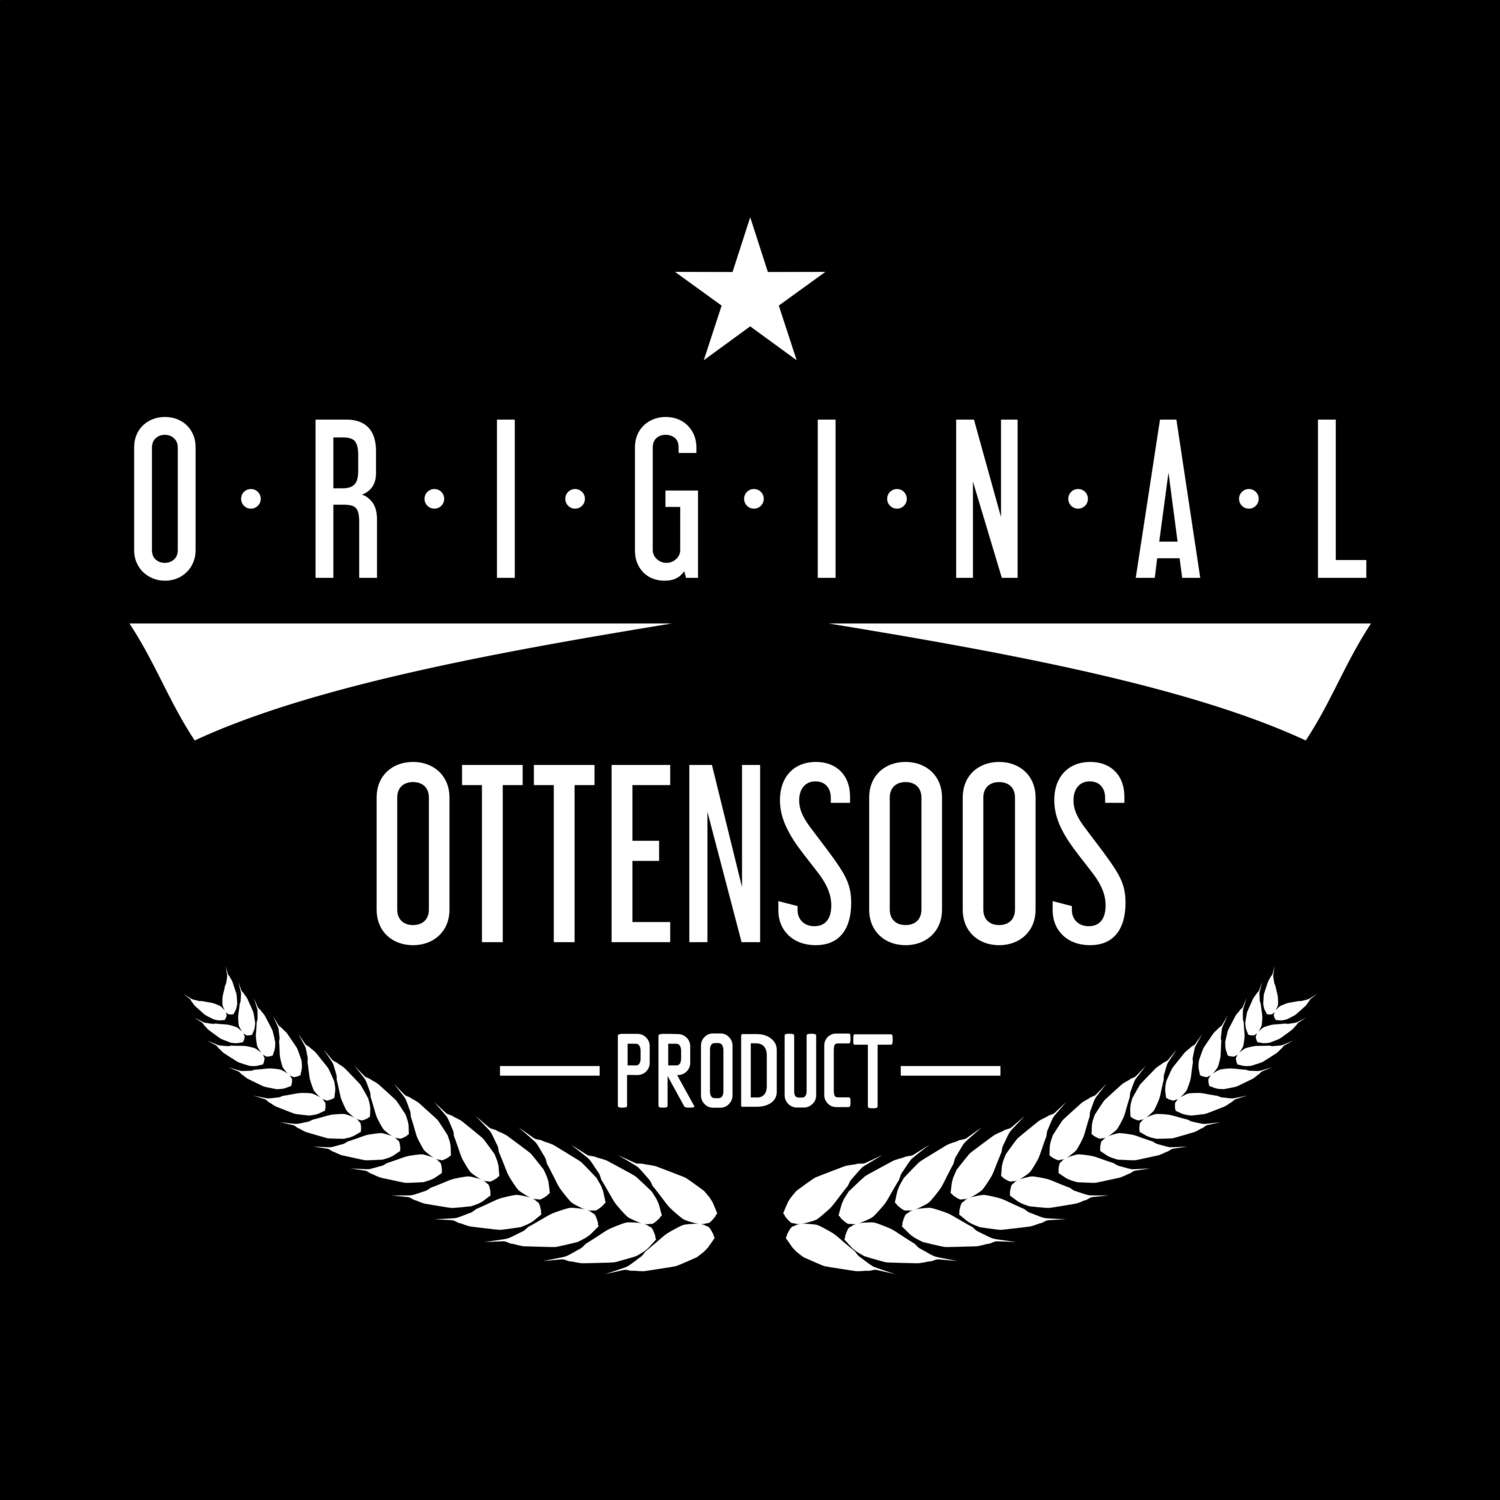 Ottensoos T-Shirt »Original Product«